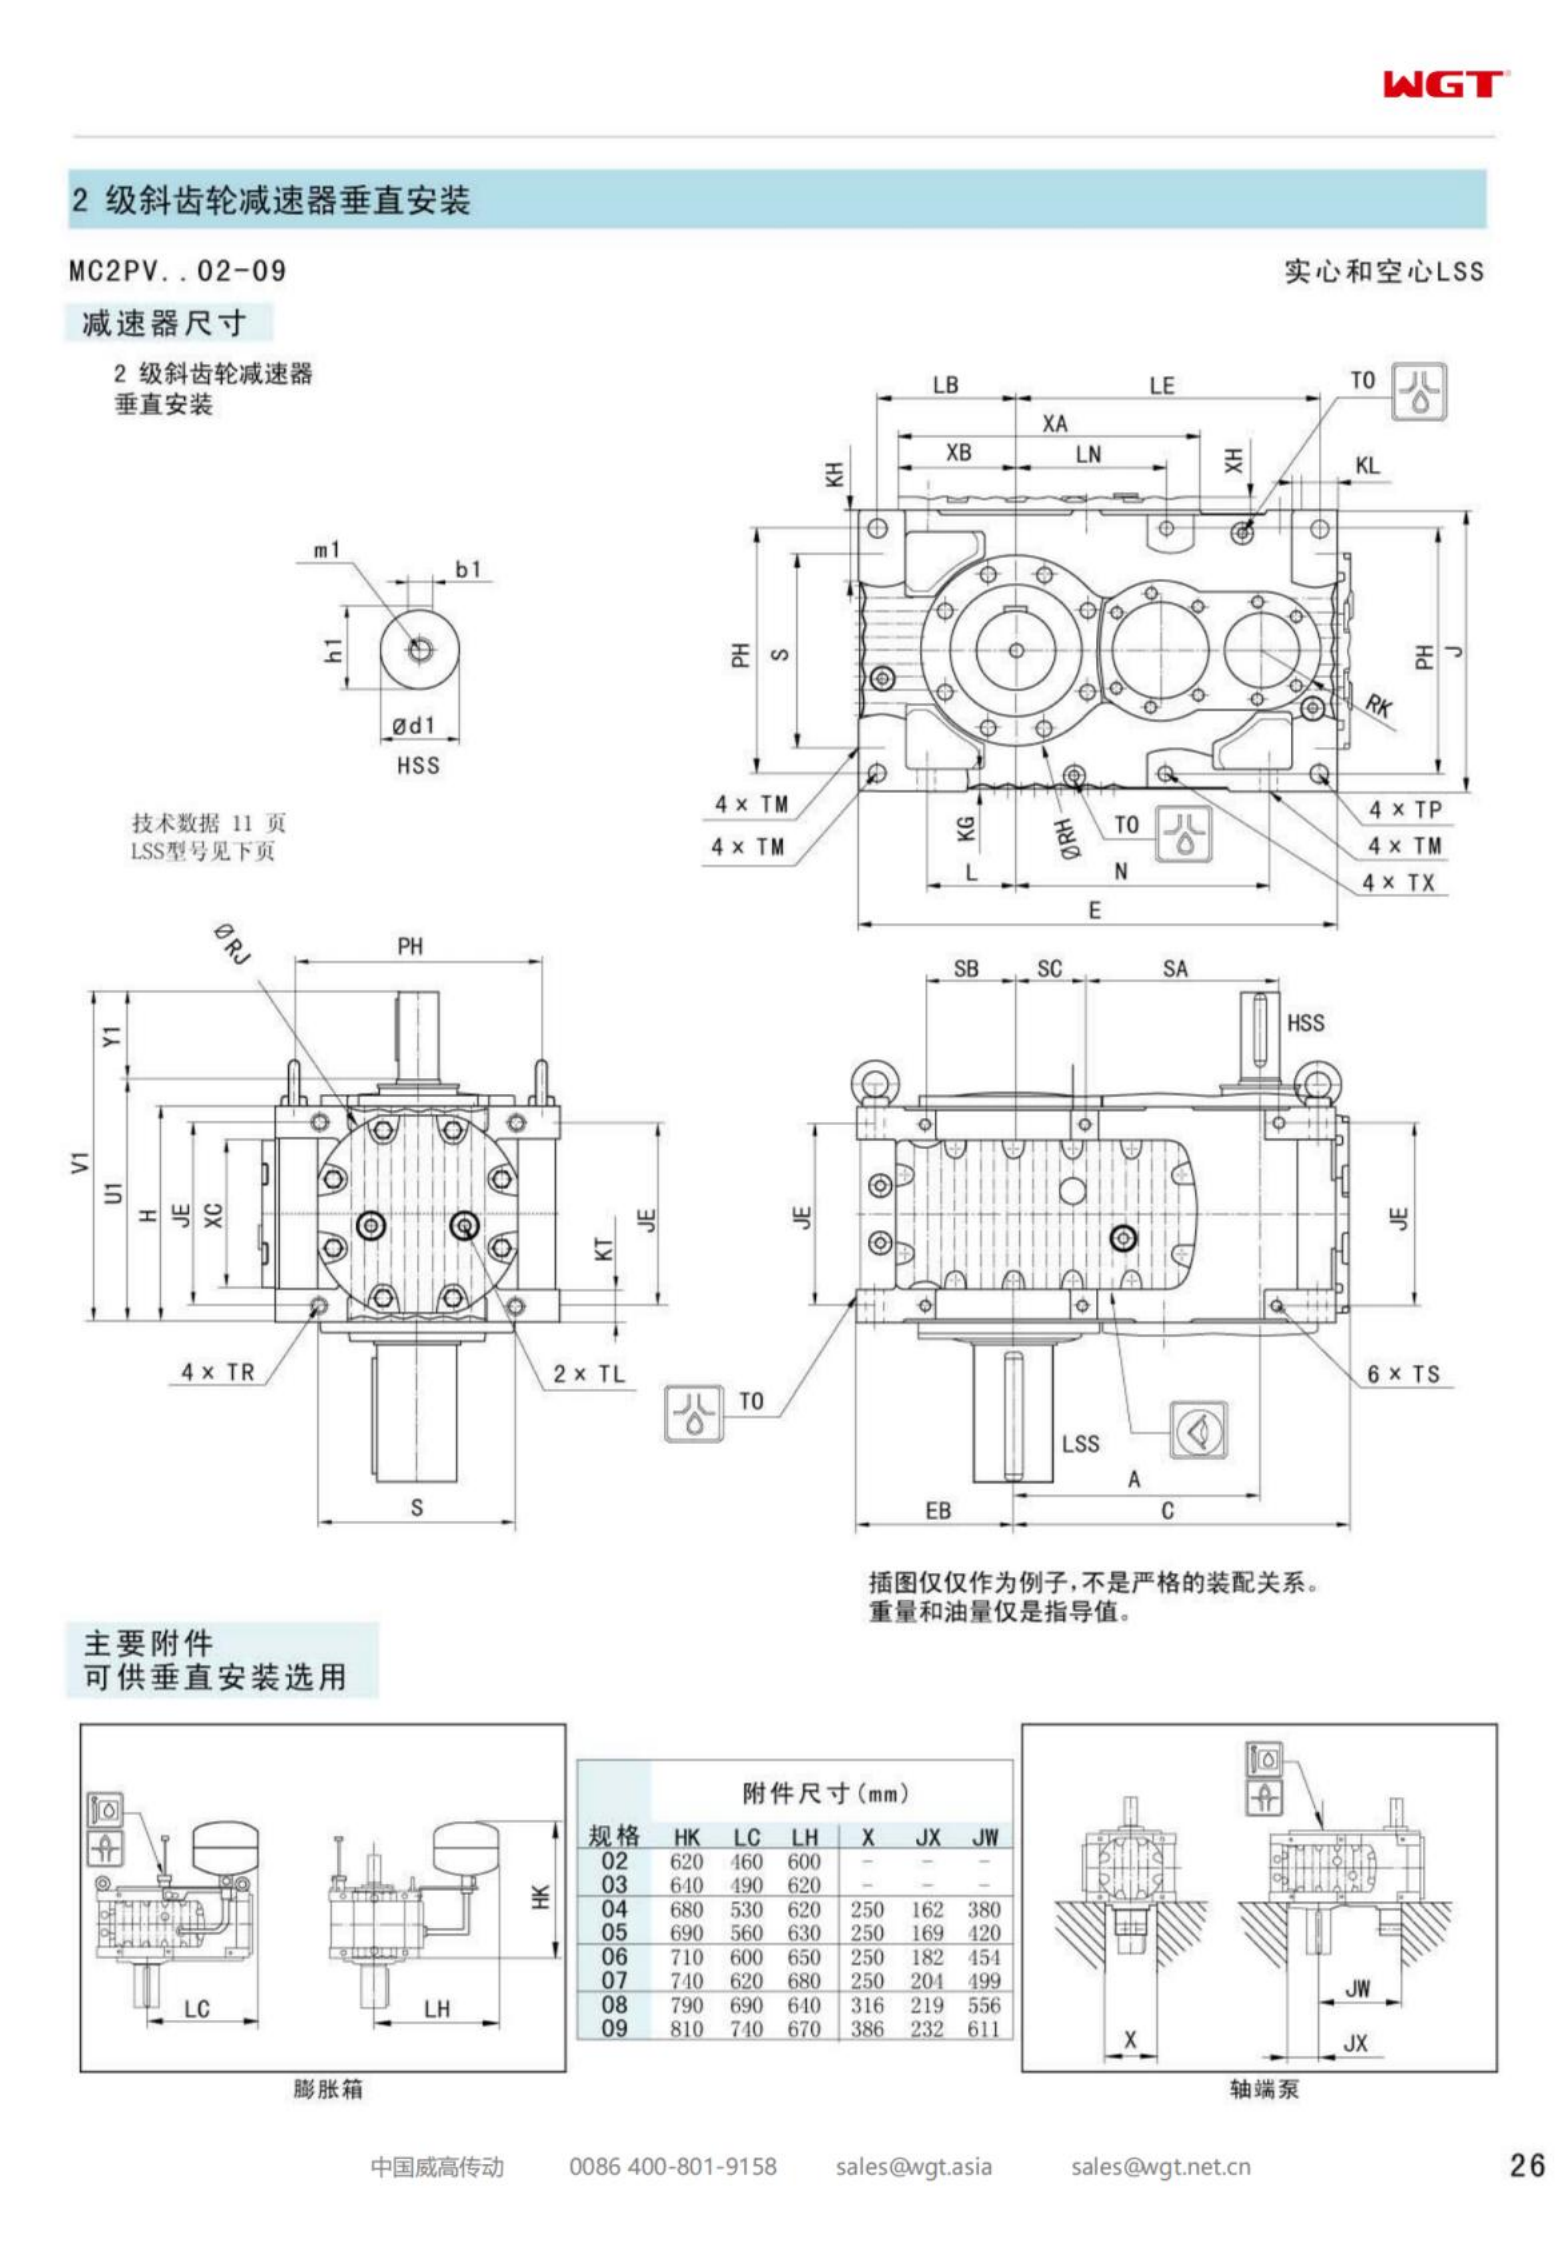 MC2PVST02 replaces _SEW_MC_Series gearbox (patent)